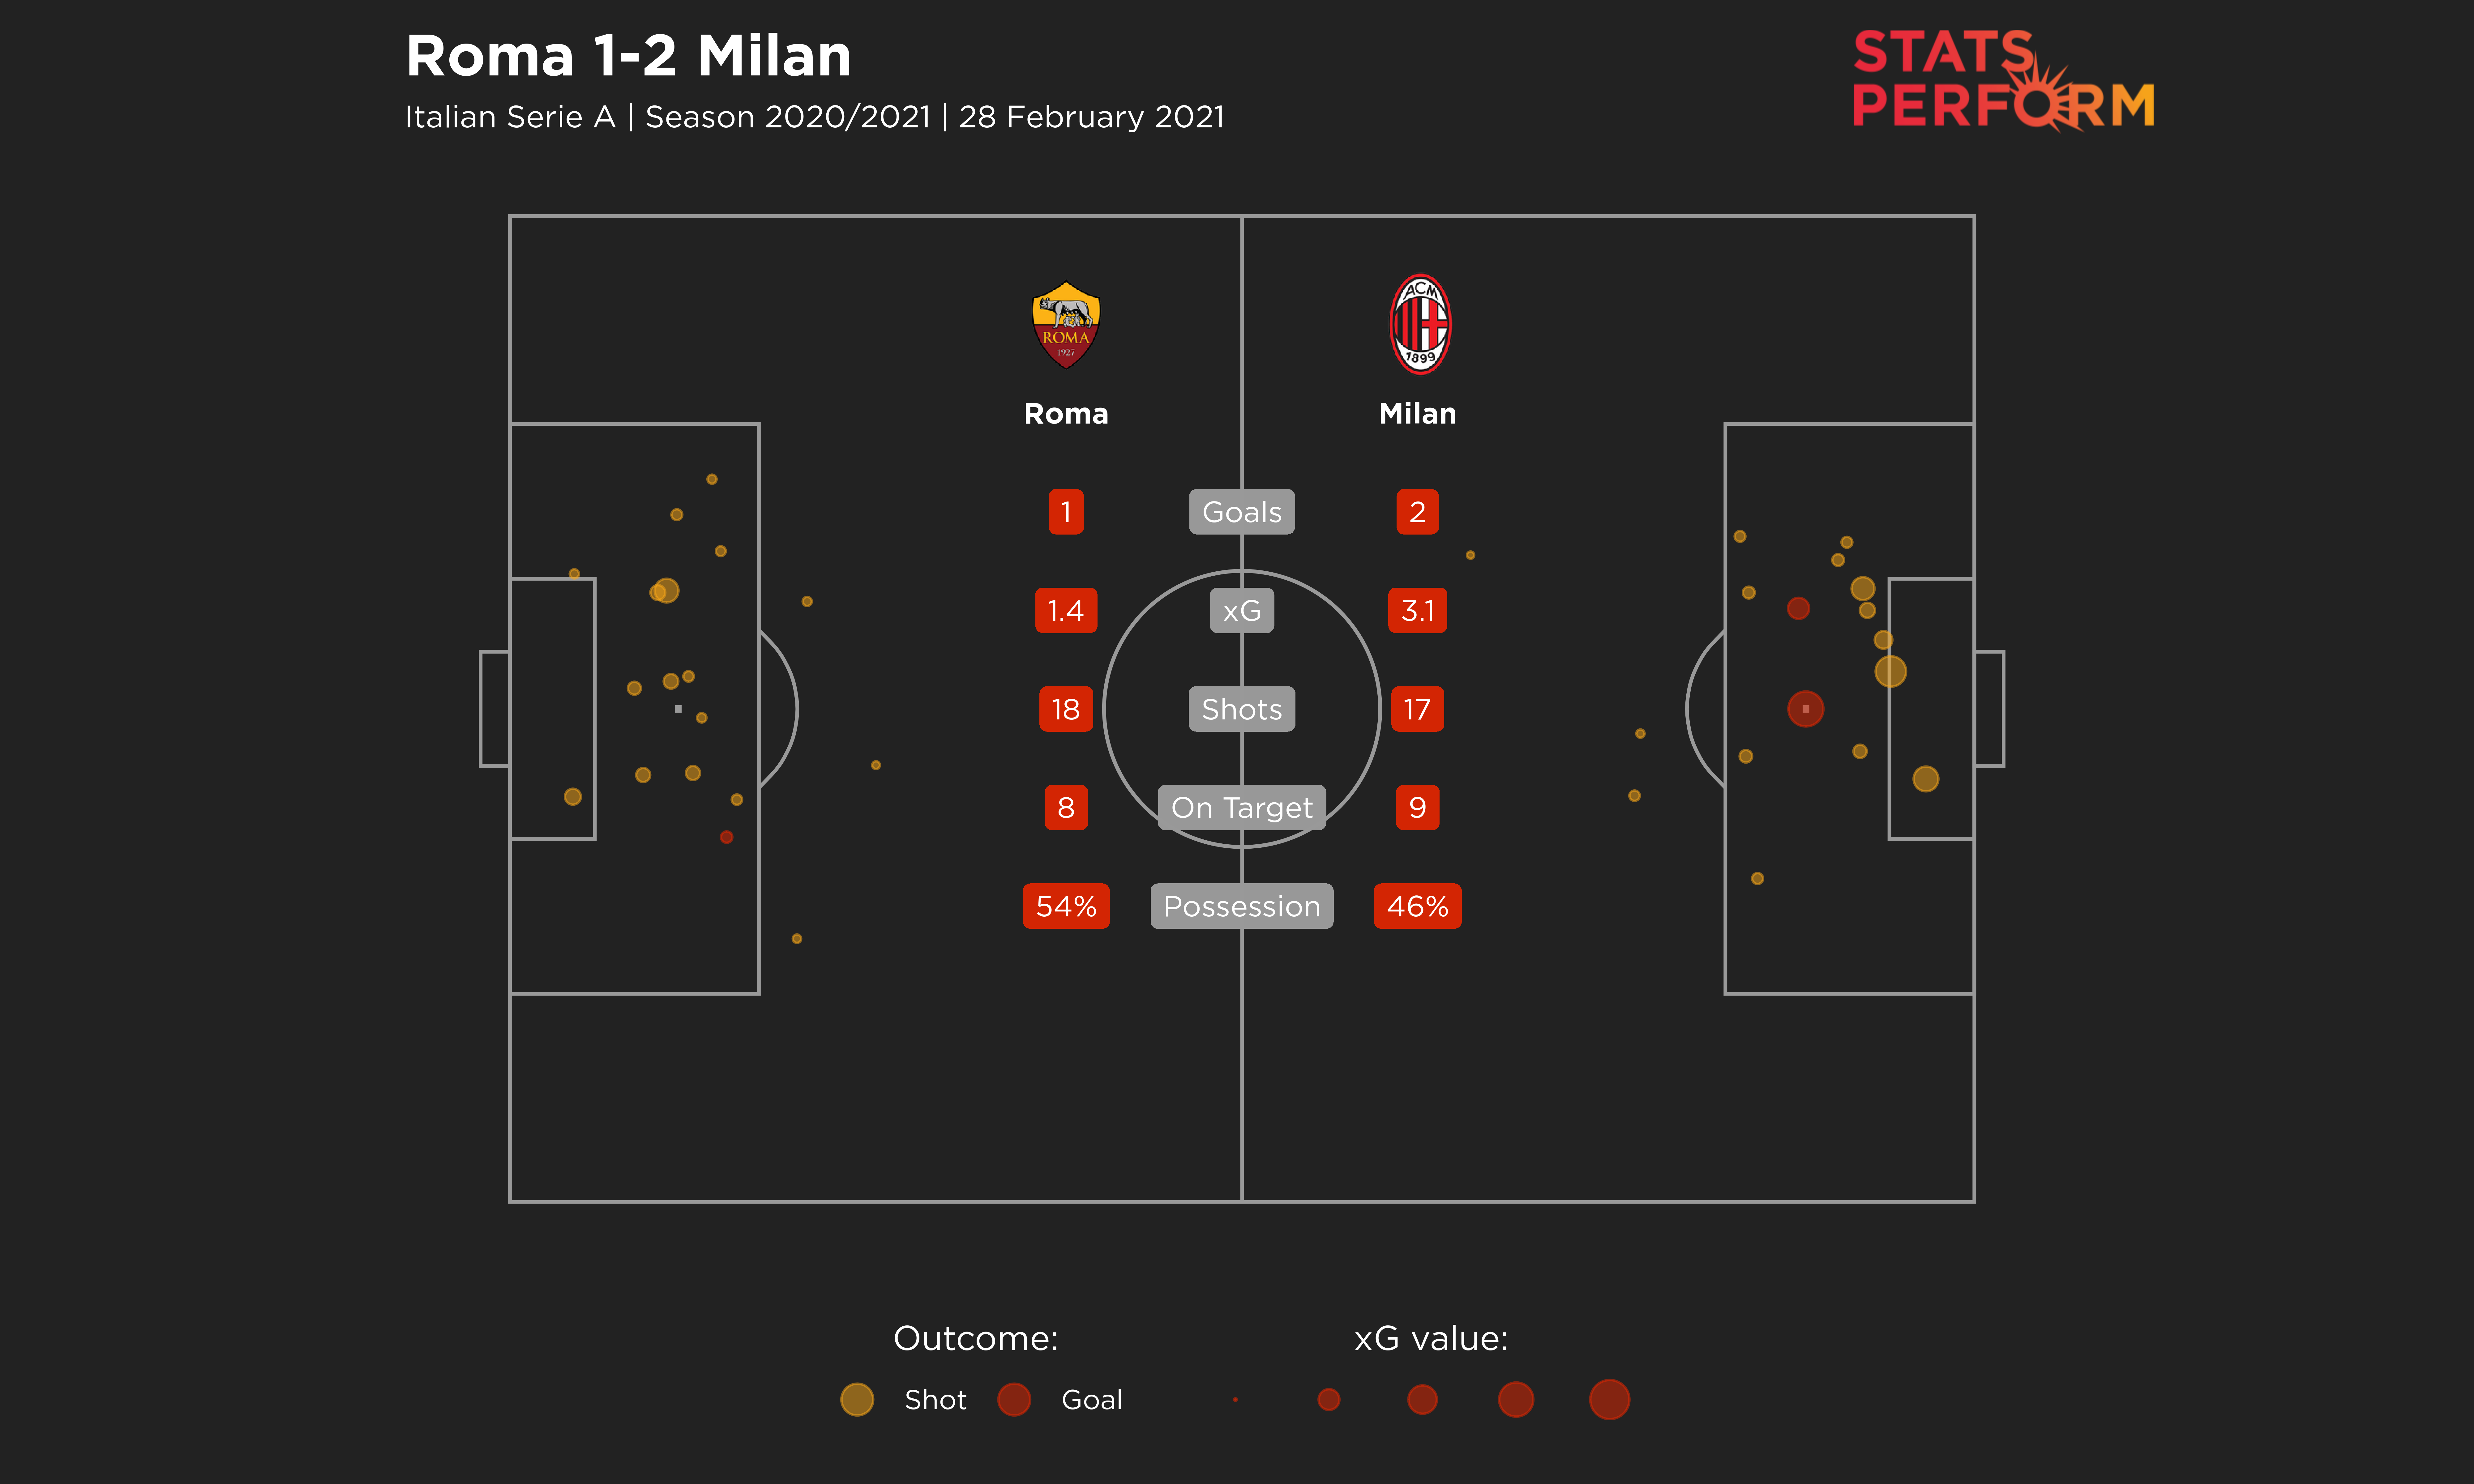 Roma v Milan match facts